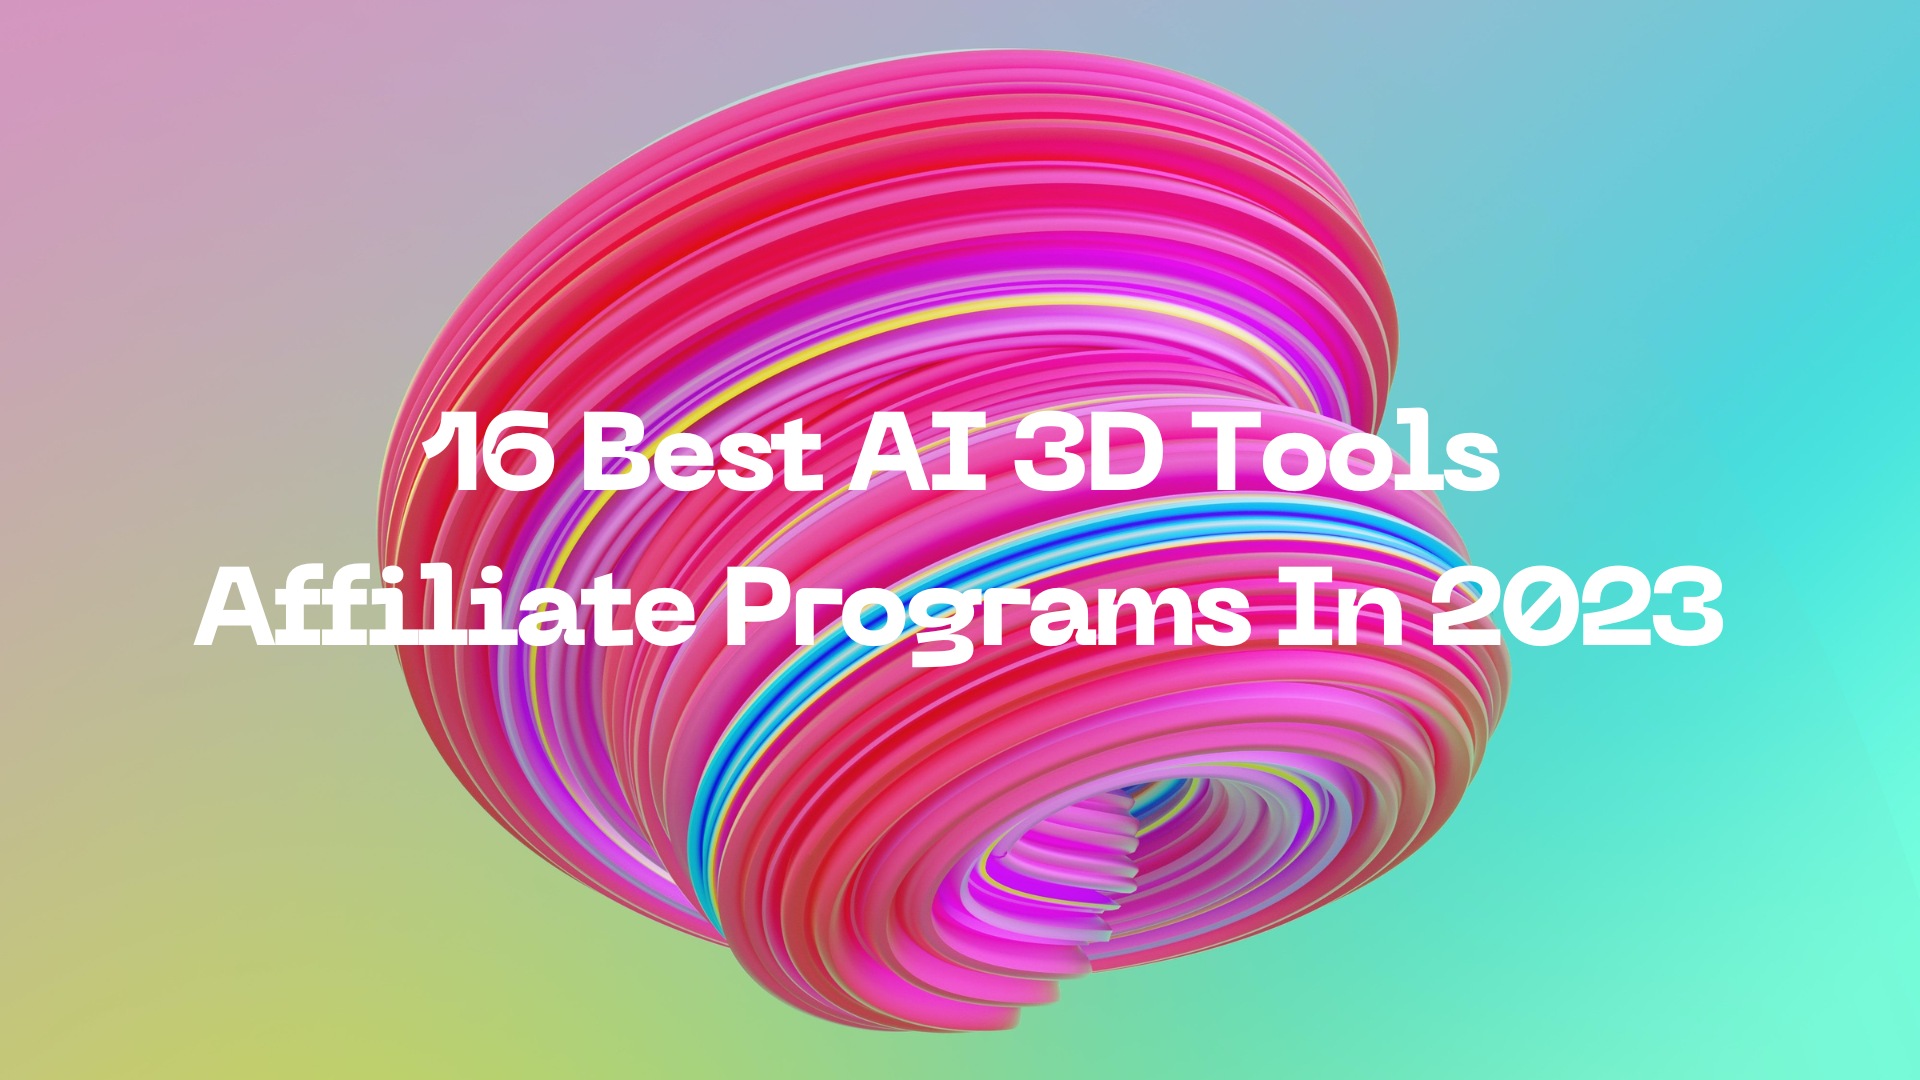 16 Best AI 3D Tools Affiliate Programs In 2023